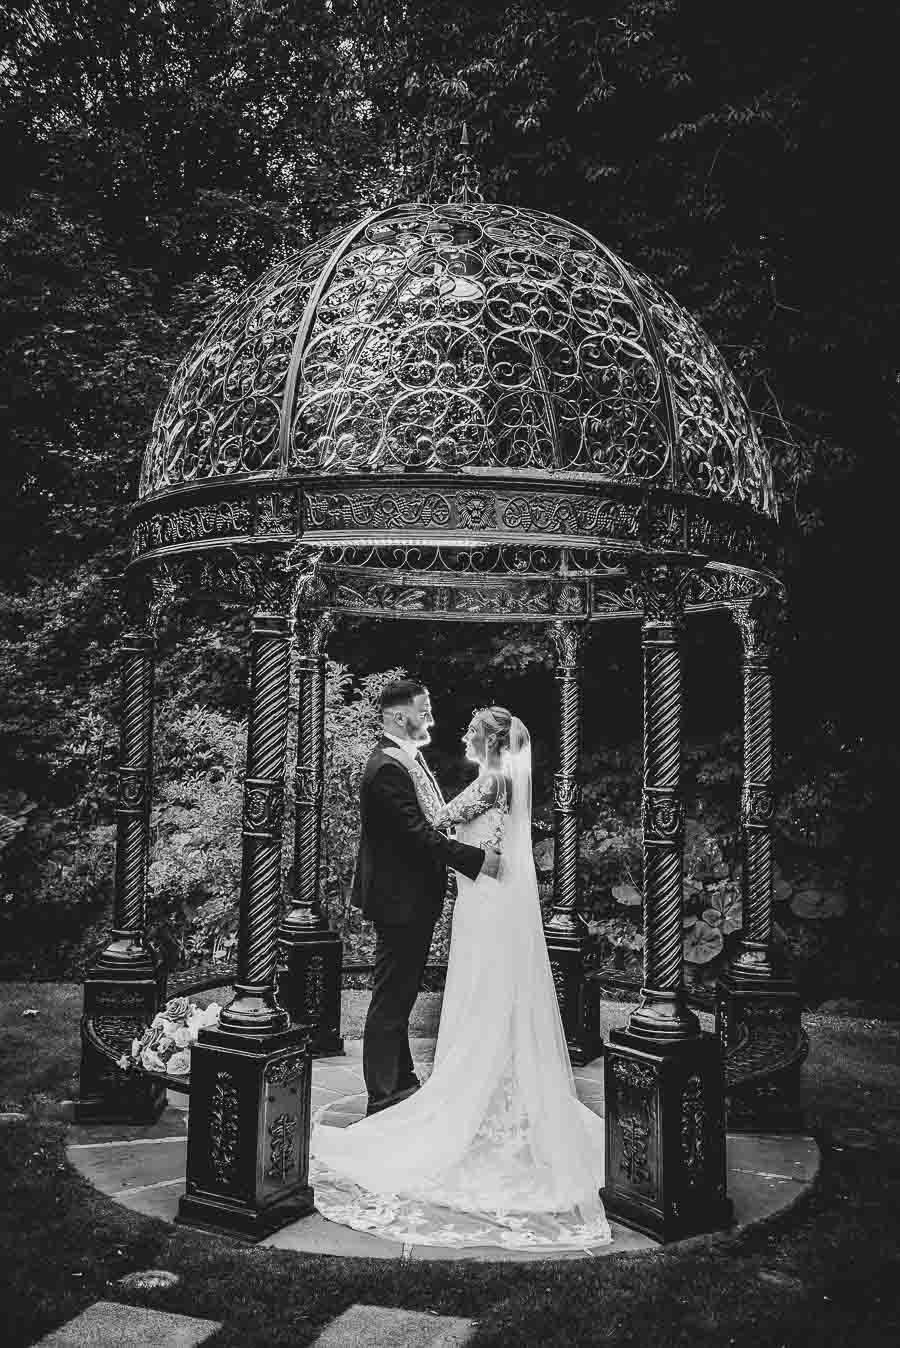 Bride & groom standing under gazebo at Ballygally Castle